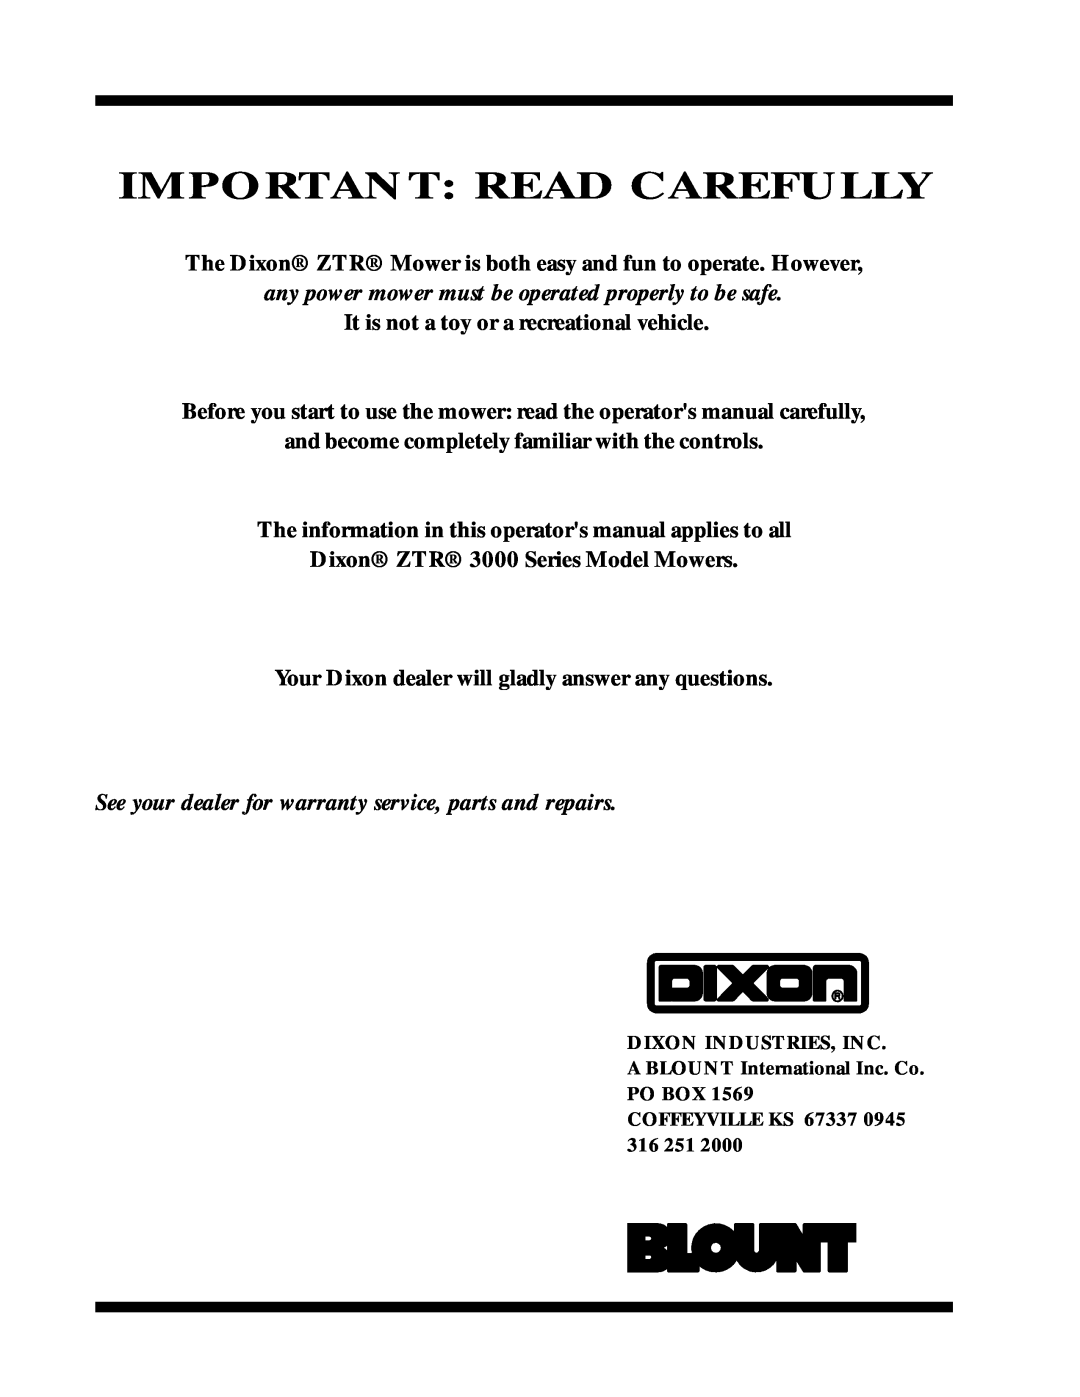 Dixon 6025 manual Important: Read Carefully 